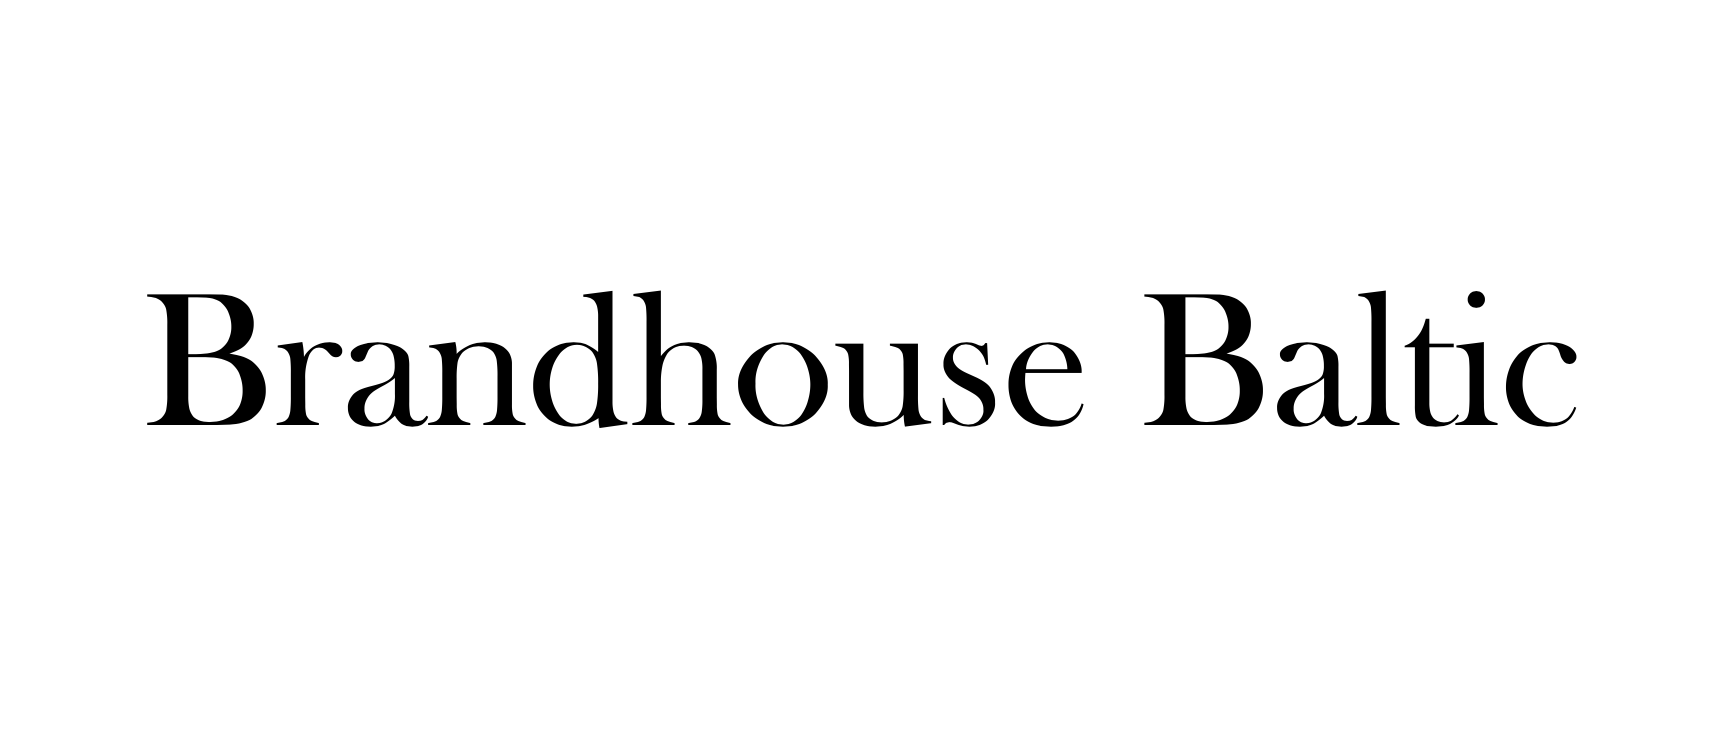 Brandhouse Baltic